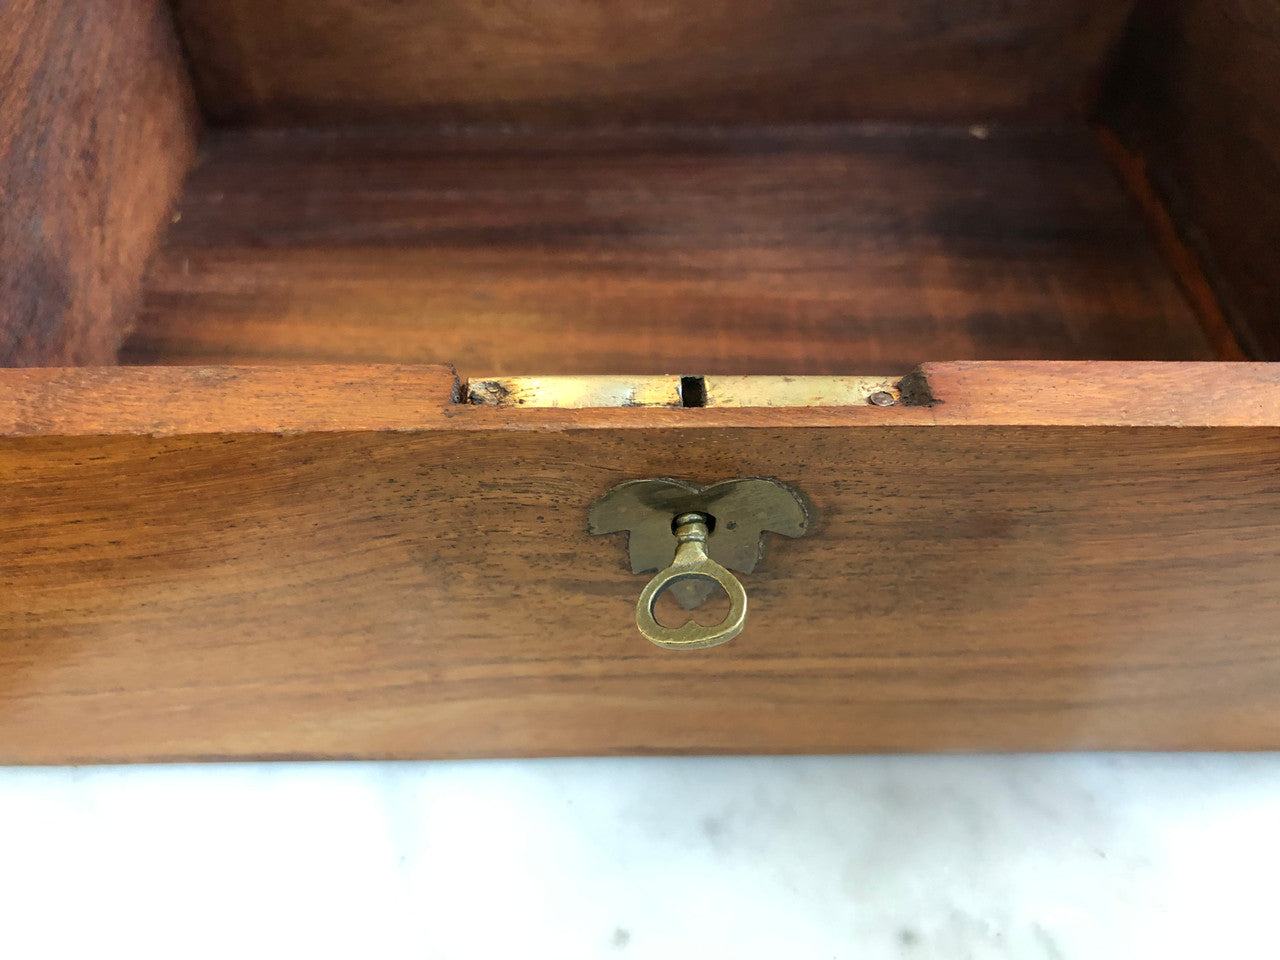 Vintage Mahogany Lockable Wooden Box